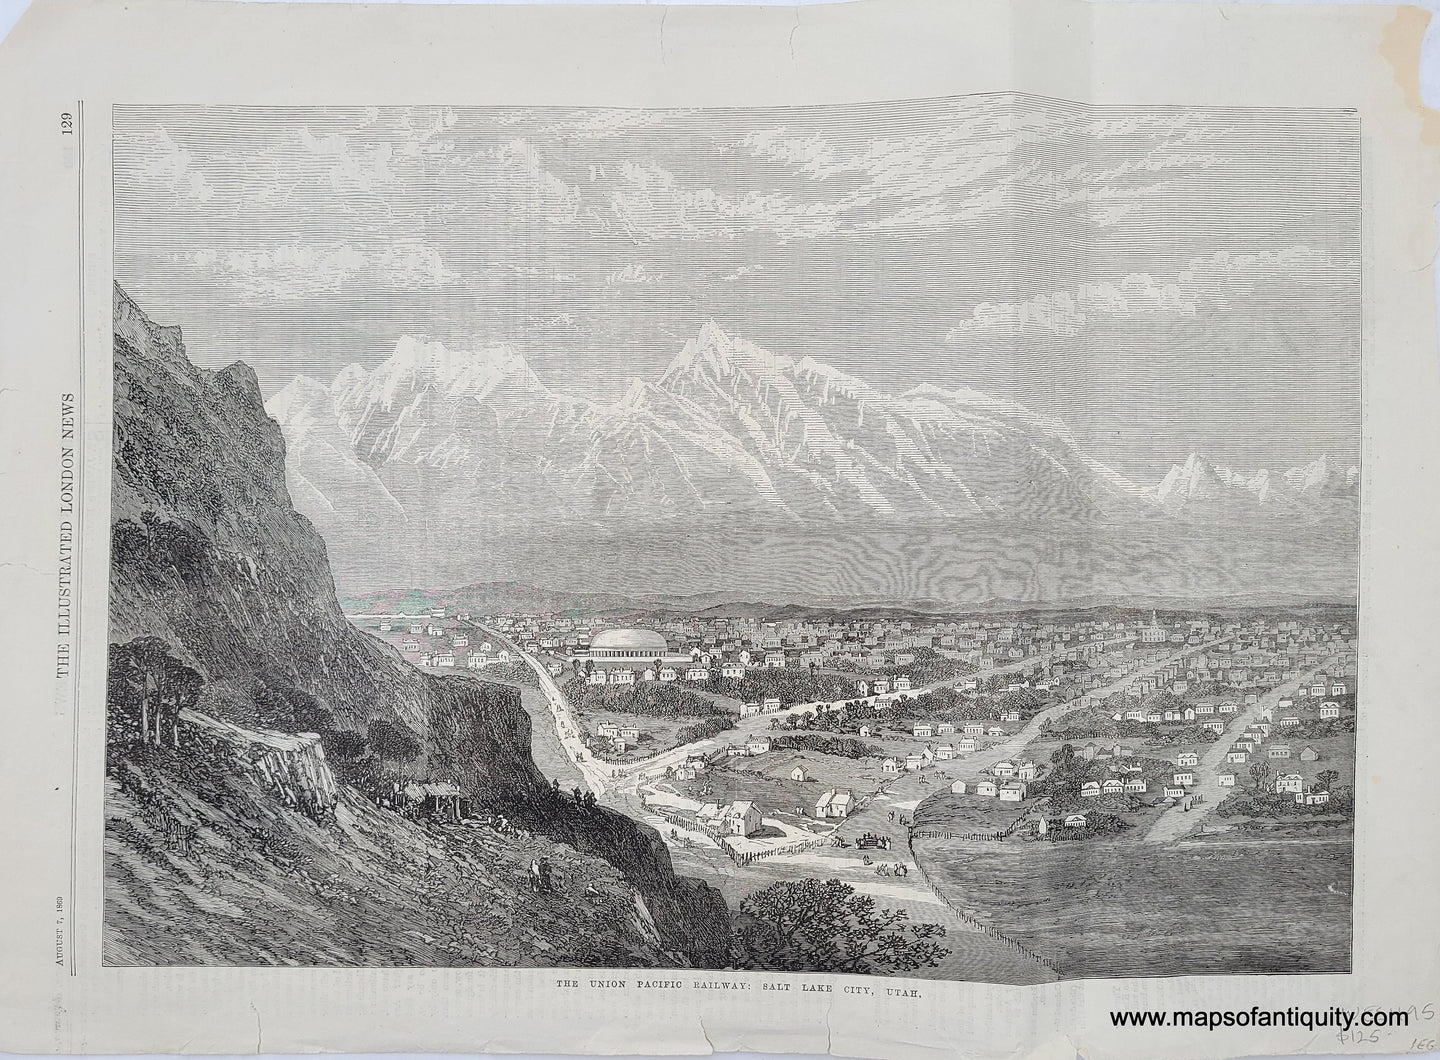 Genuine-Antique-Print-The-Union-Pacific-Railway--Salt-Lake-City-Utah-1869-London-Illustrated-News-Maps-Of-Antiquity